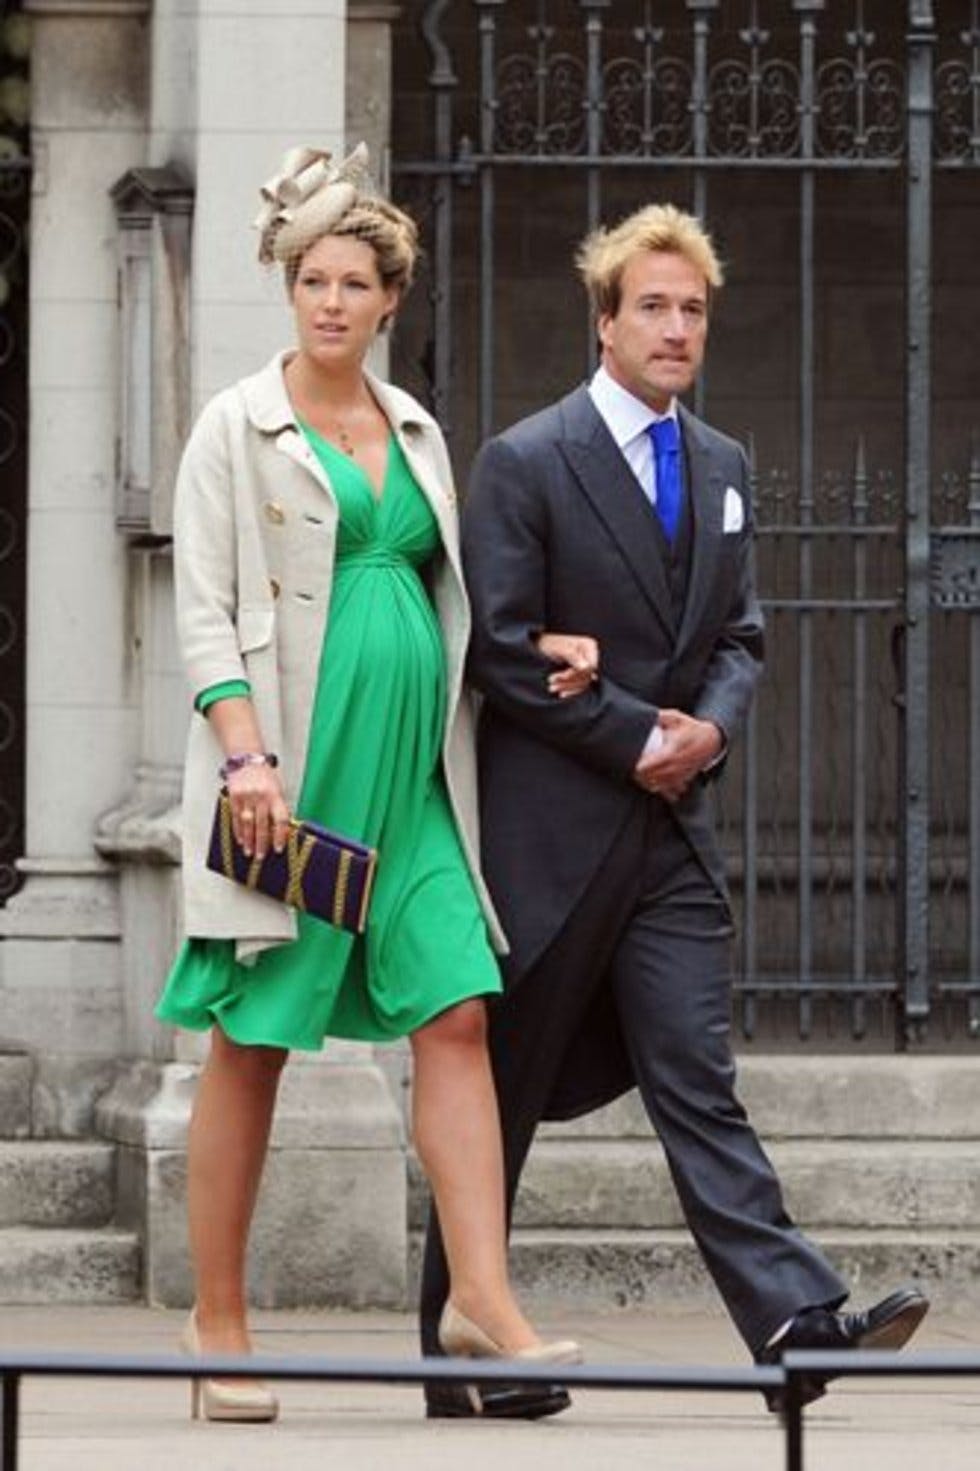 Image result for 2011 royal wedding guests